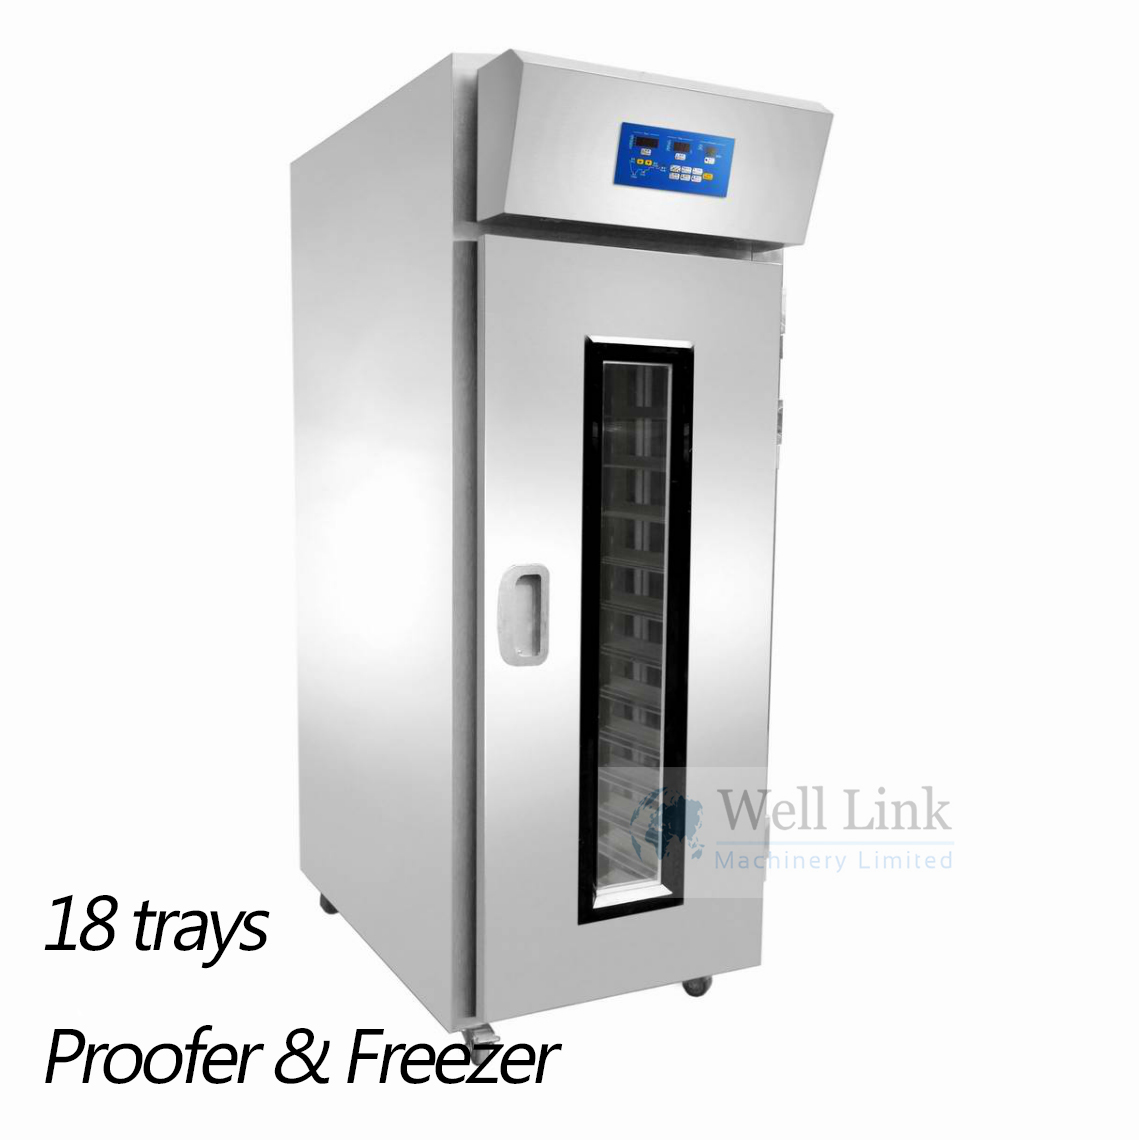 18 trays of Freezer proofer